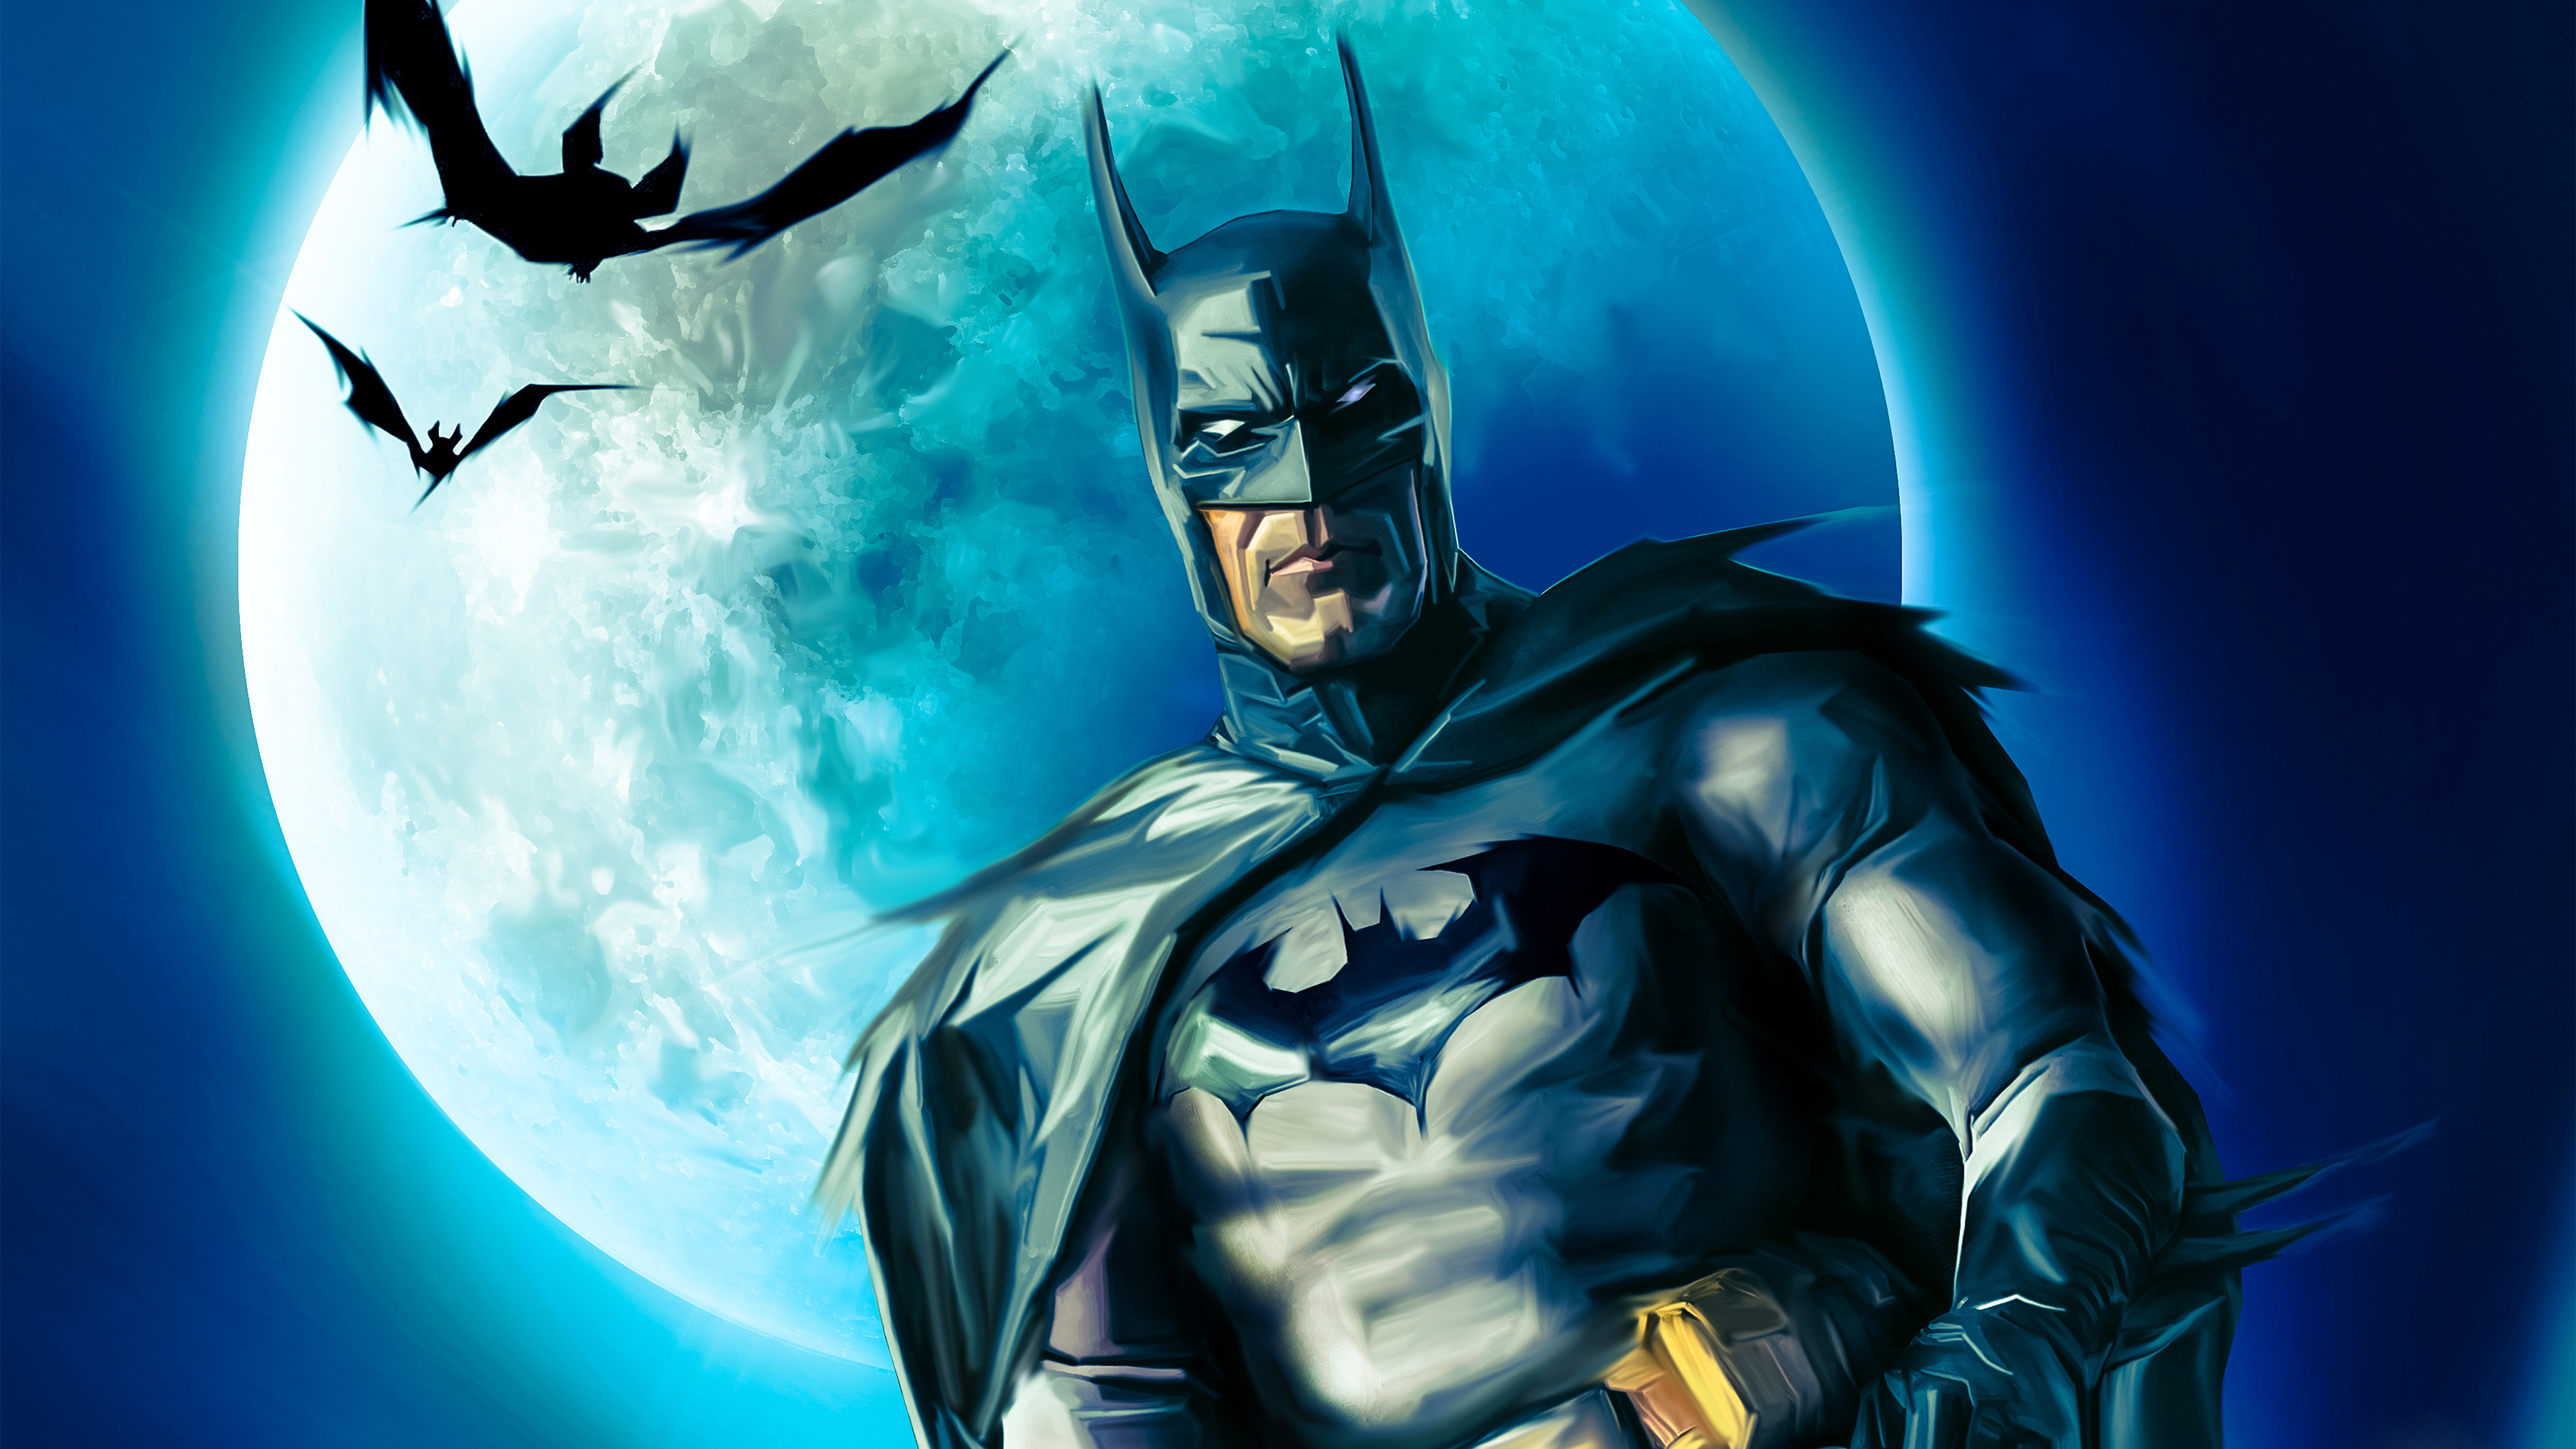 Скачать обои бесплатно Комиксы, Бэтмен, Комиксы Dc картинка на рабочий стол ПК